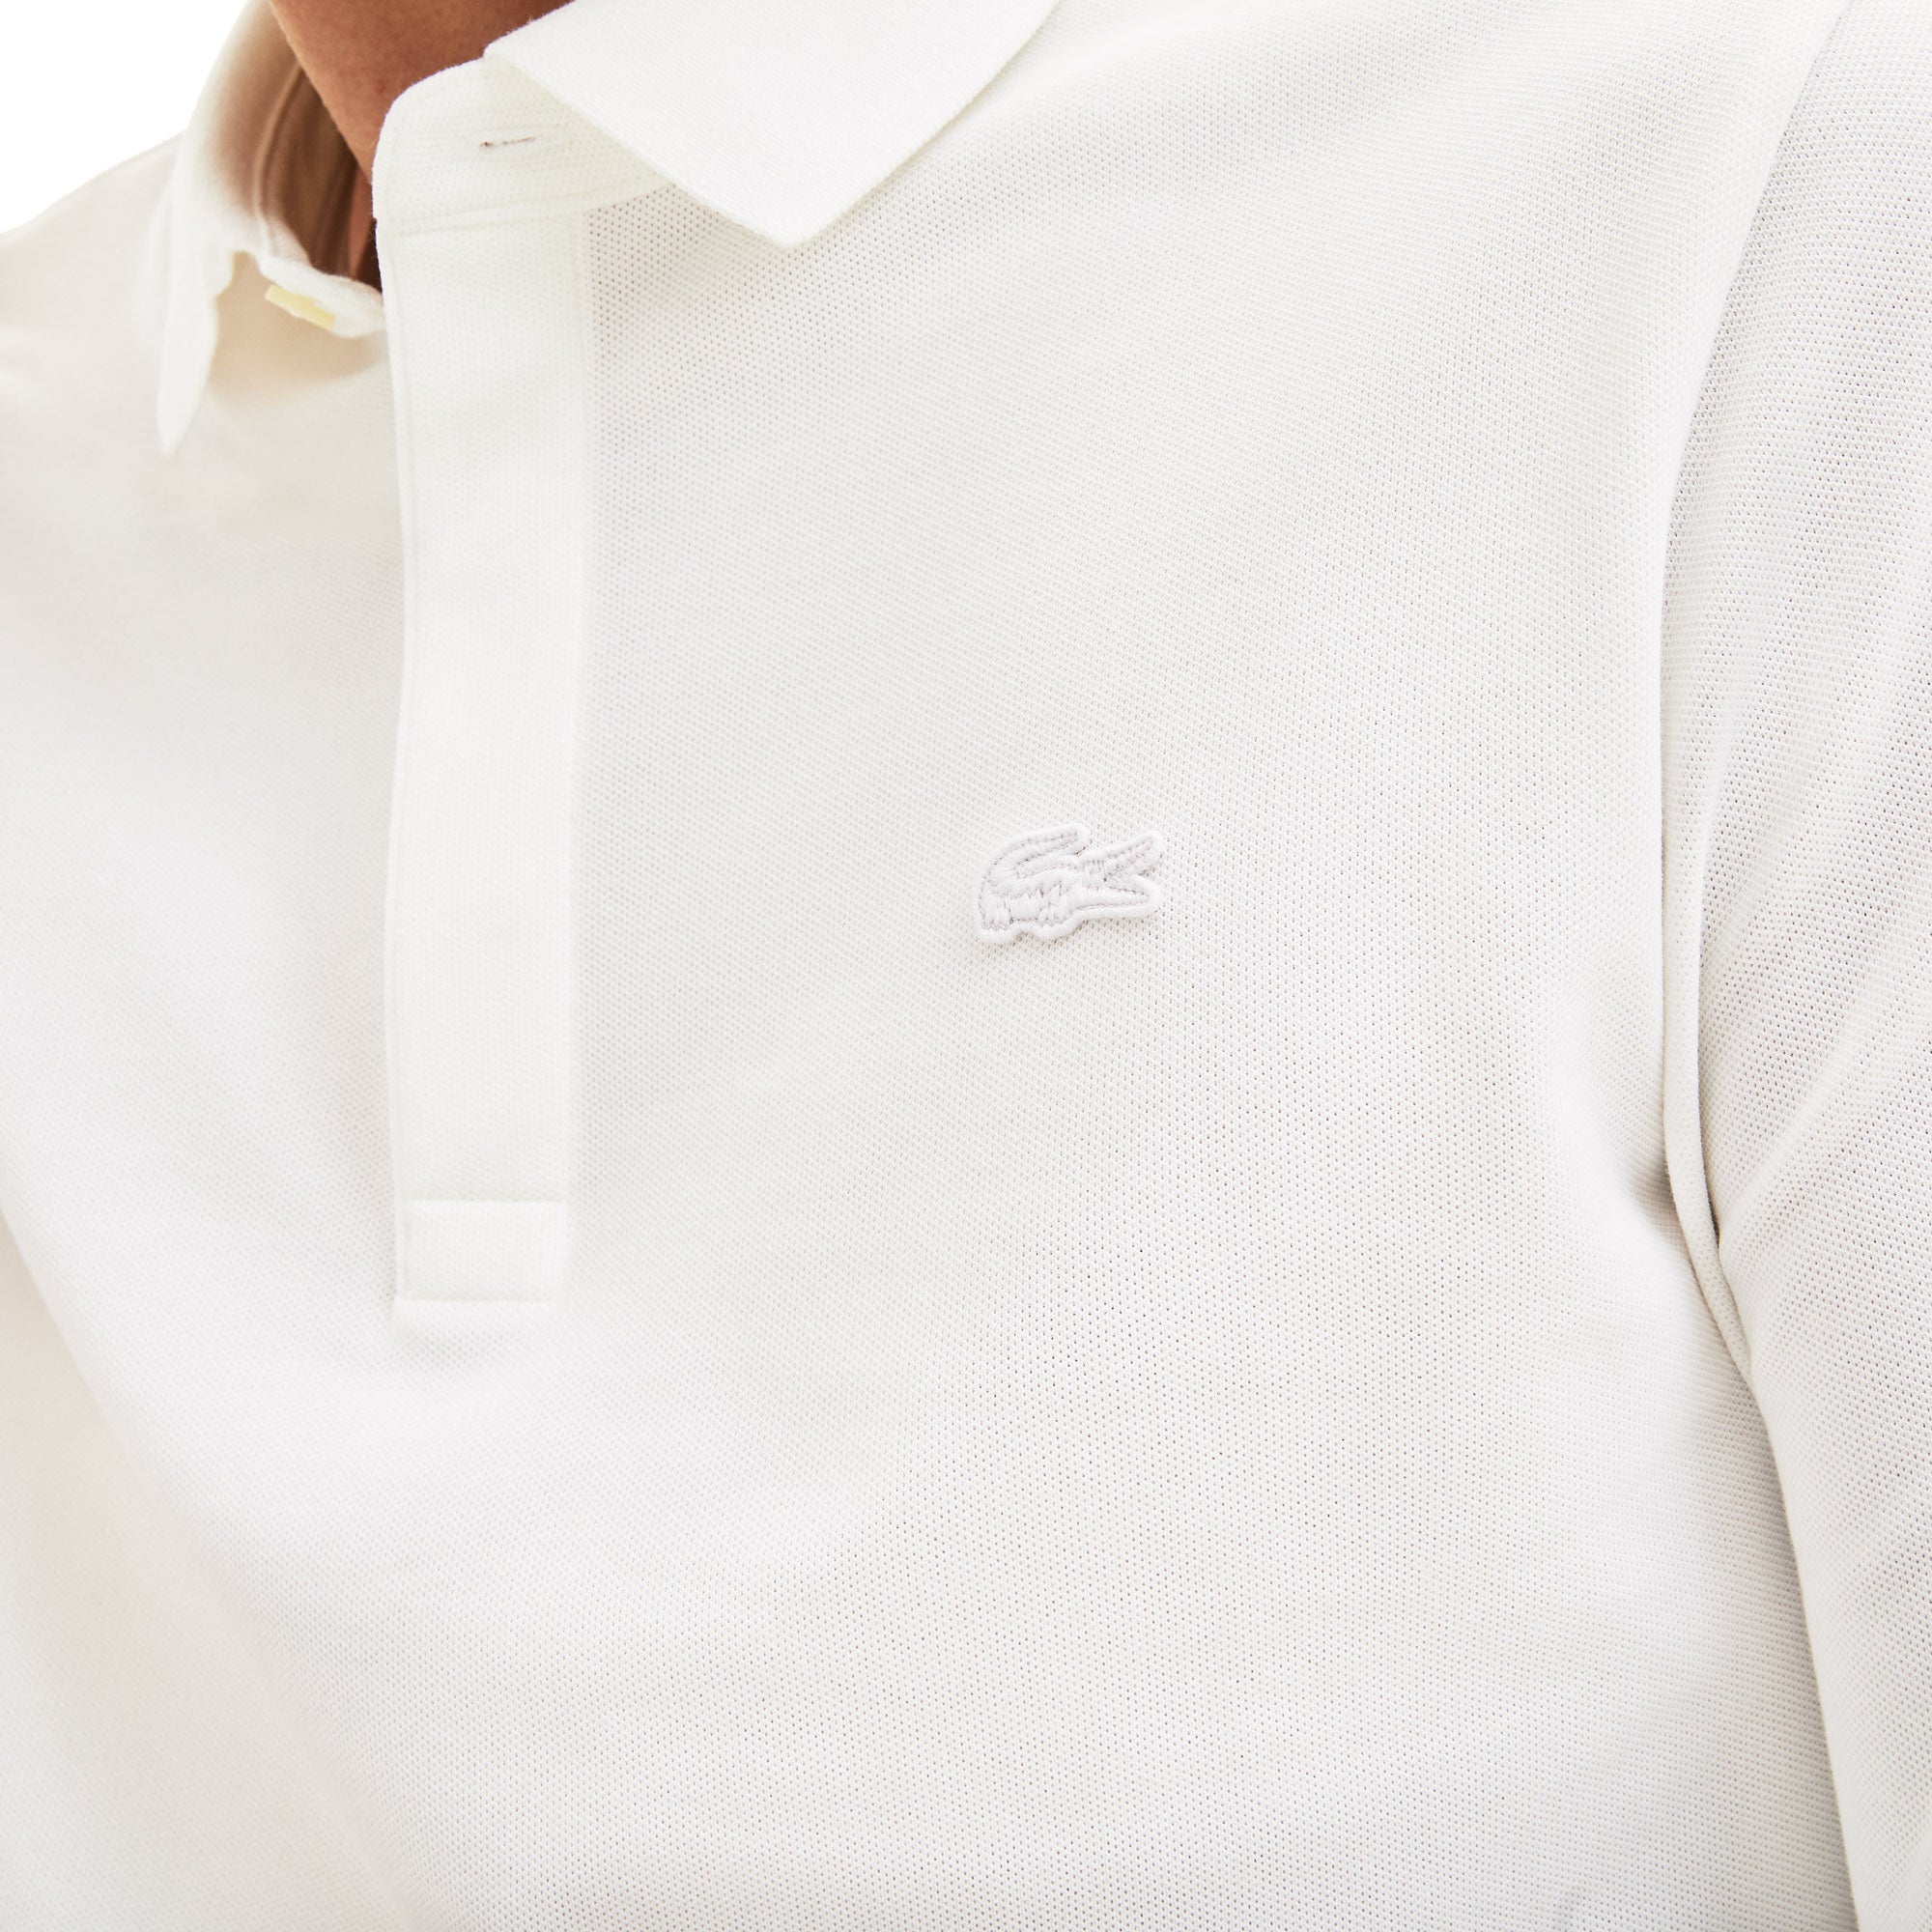 Lacoste Long Sleeve Paris Stretch Polo PH2481 - White